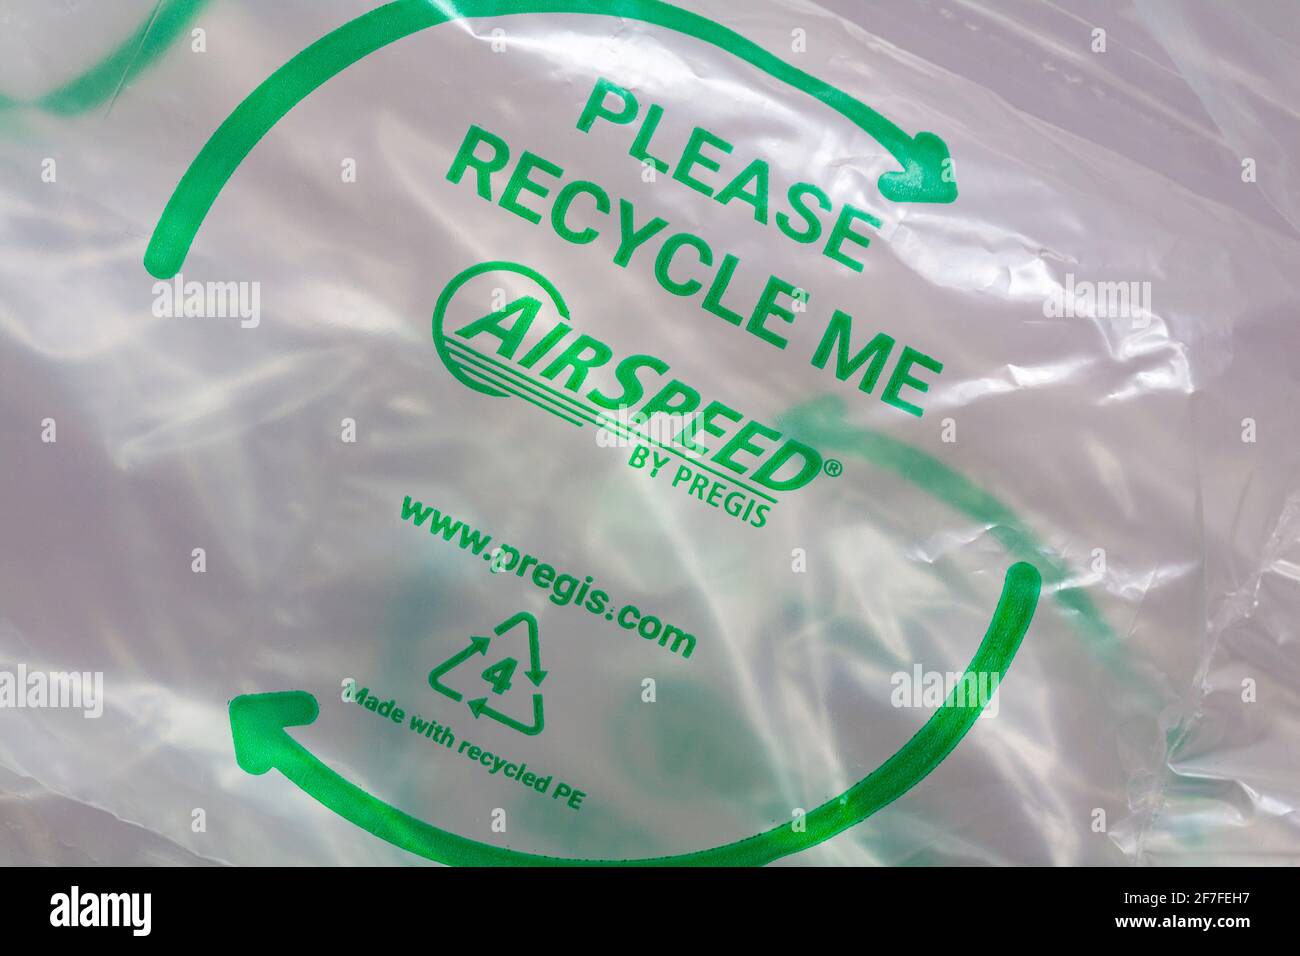 Bitte recyceln Sie mich Airspeed by PREGIS, hergestellt mit recyceltem PE – Recycling Recycling Logo-Symbol Stockfoto